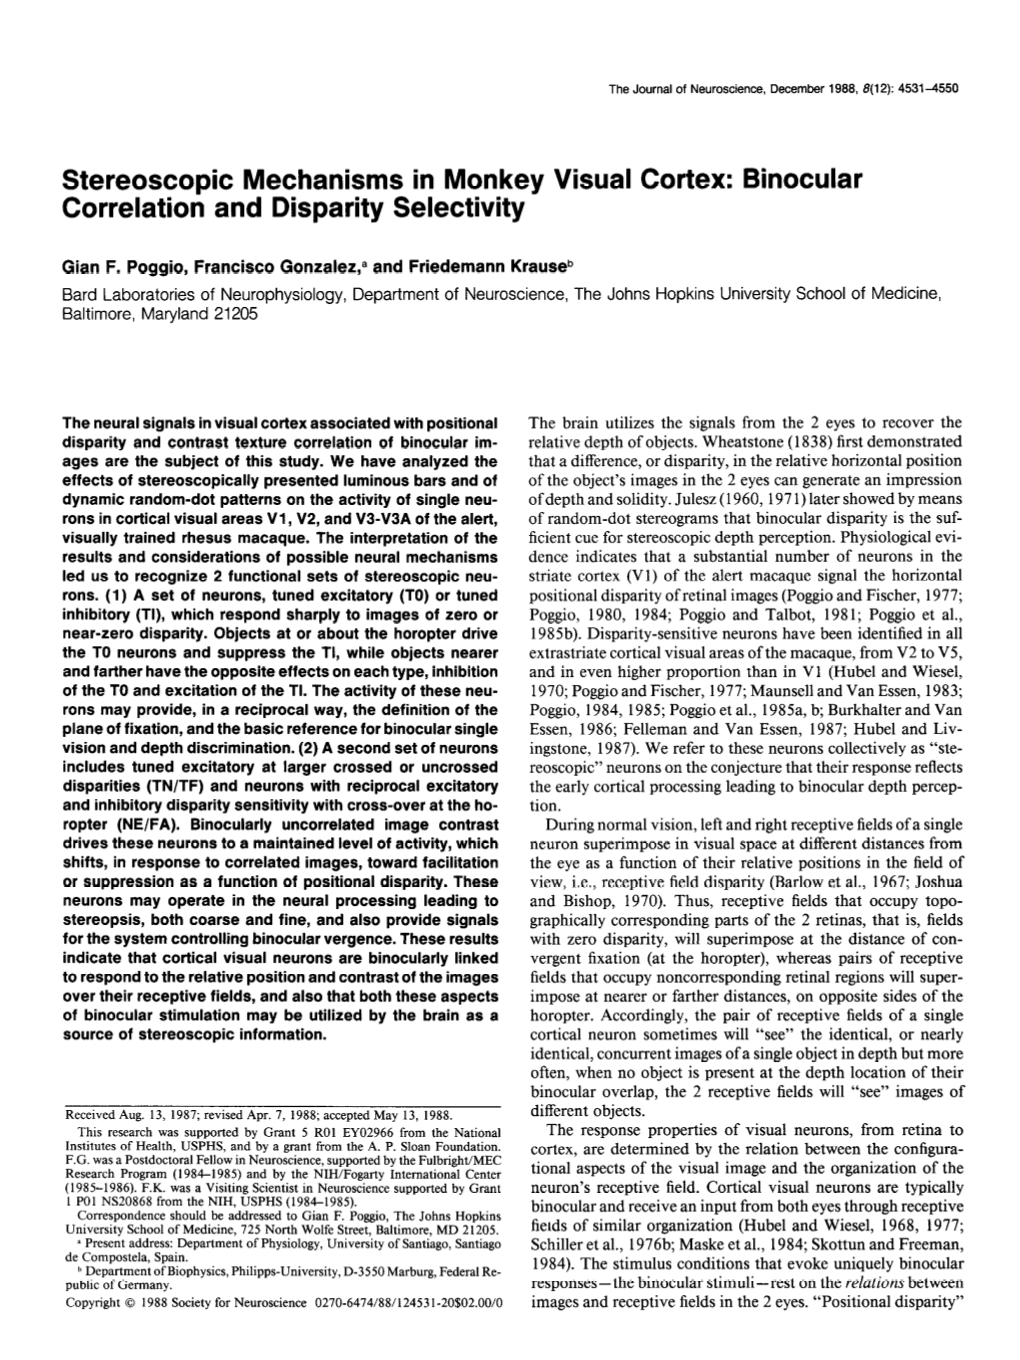 Stereoscopic Mechanisms in Monkey Visual Cortex: Binocular Correlation and Disparity Selectivity